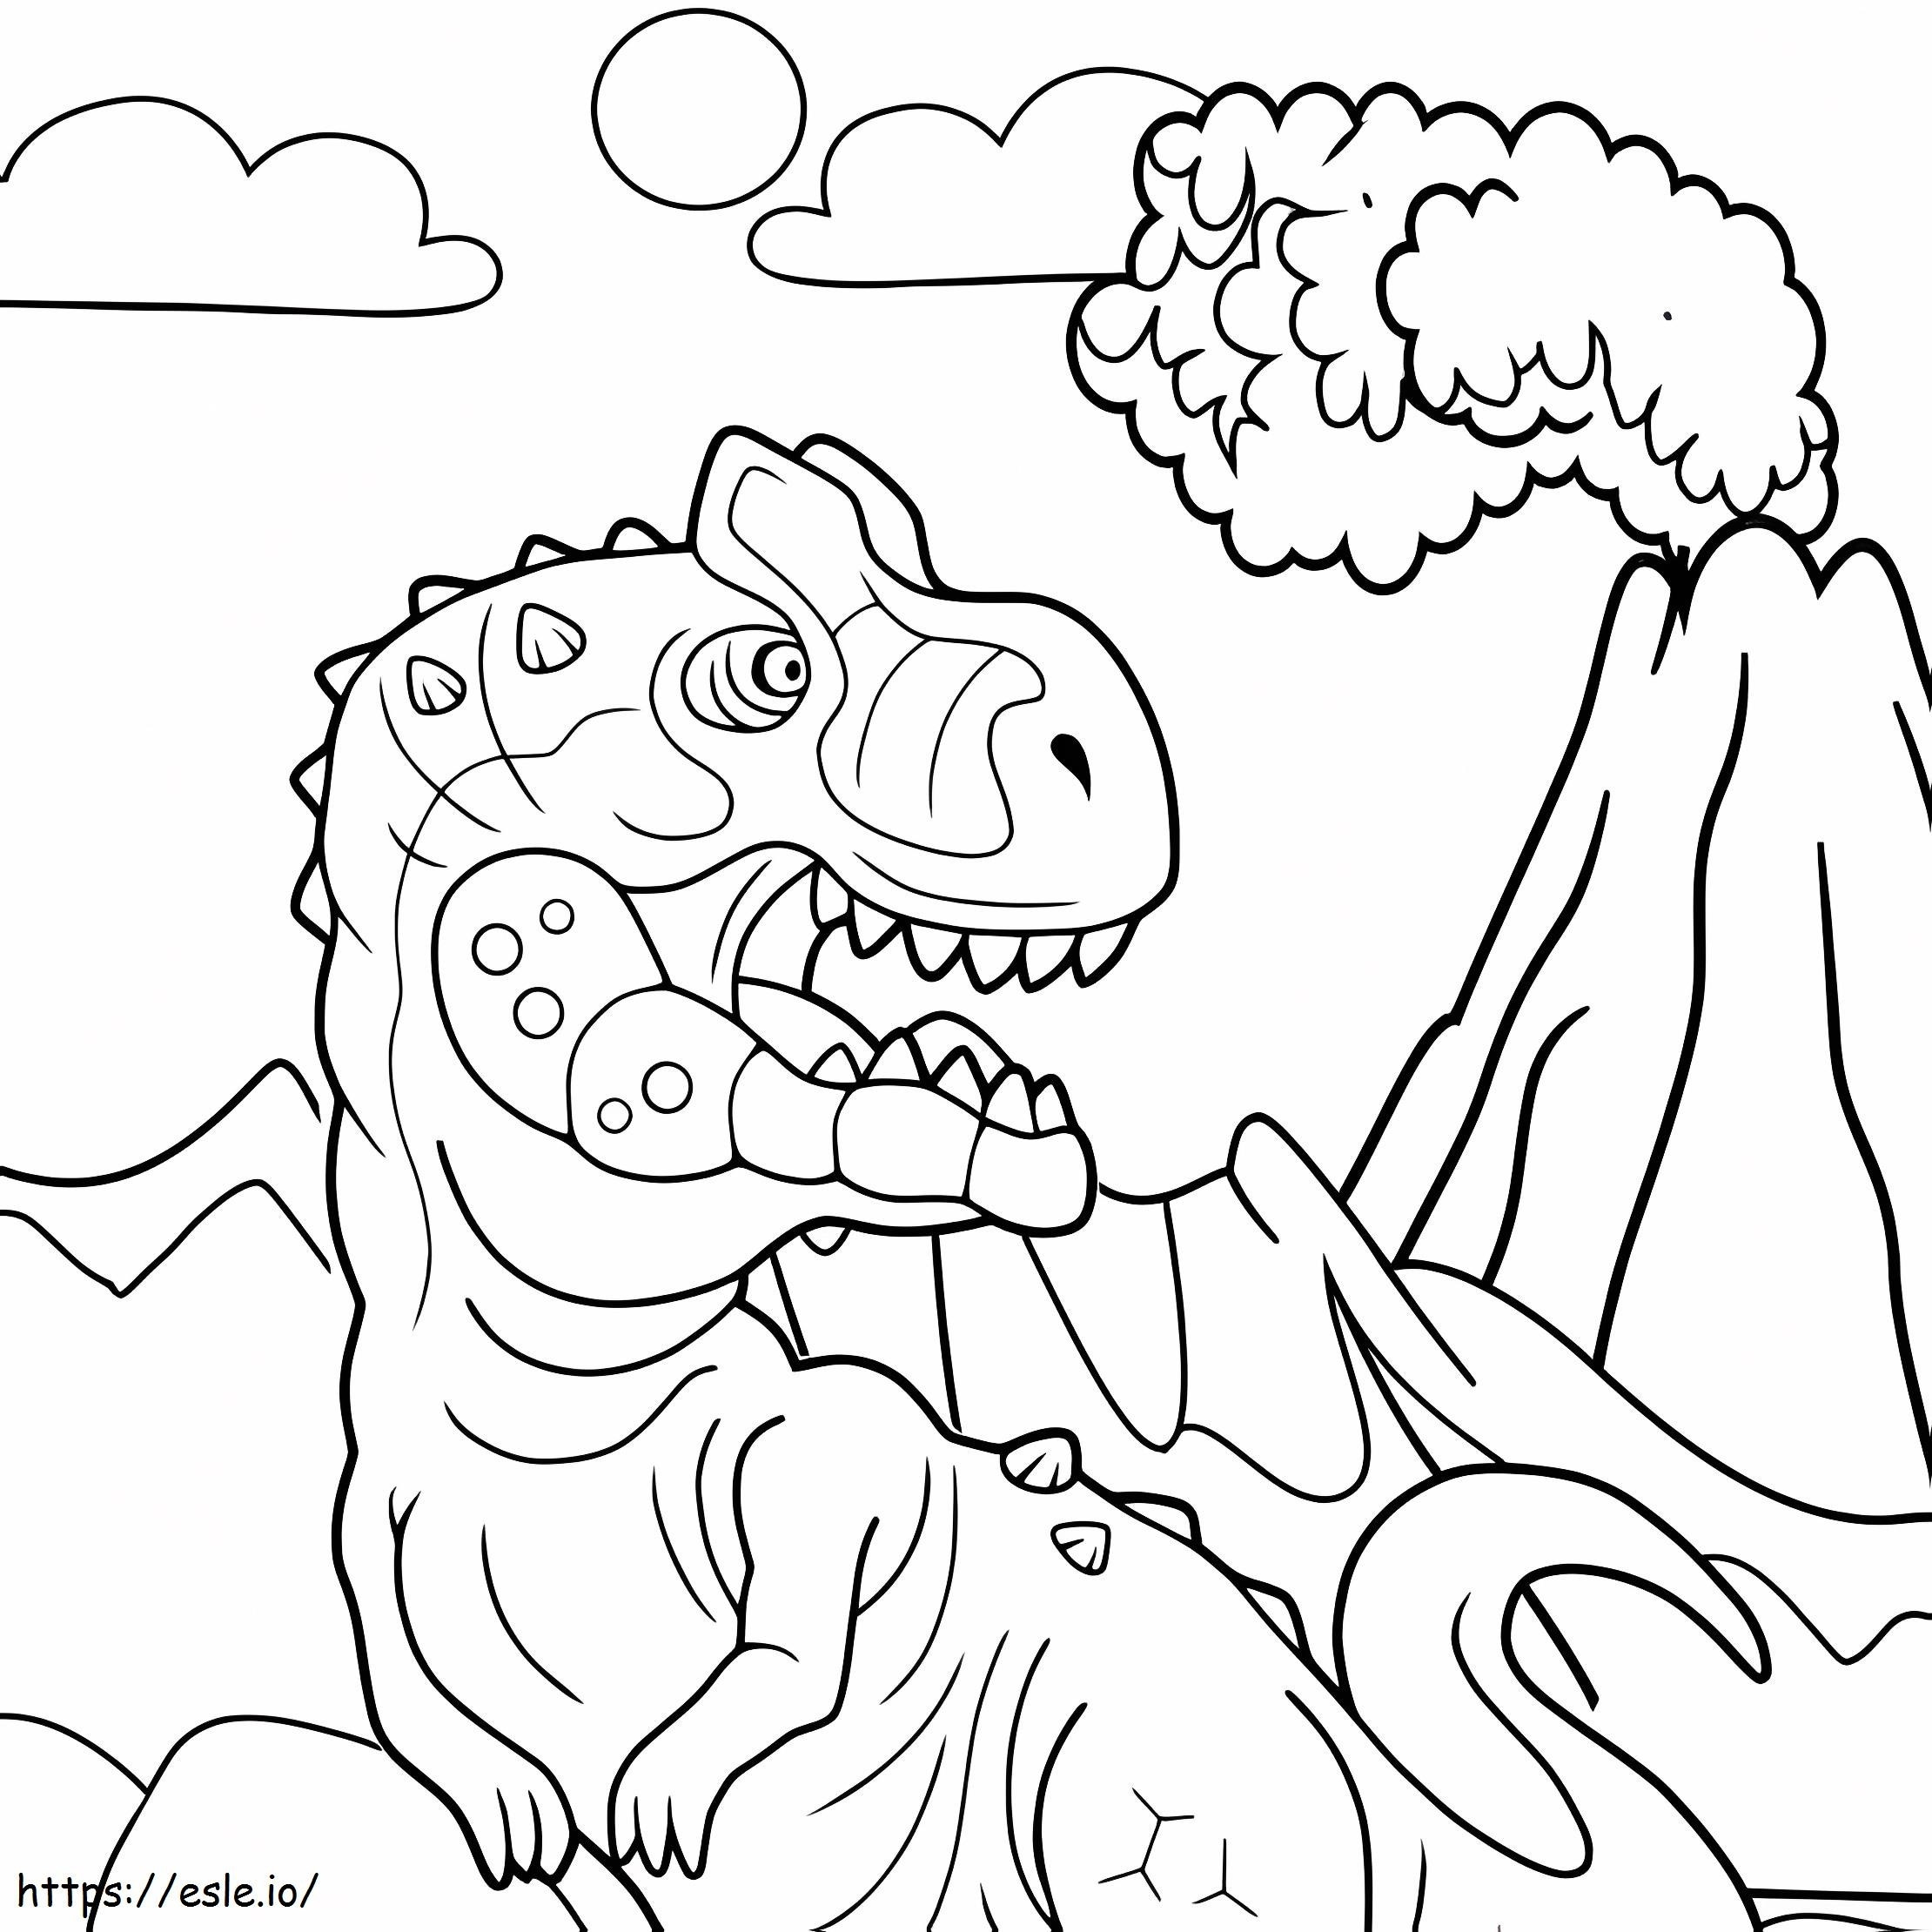 Giganotosaurus 4 coloring page